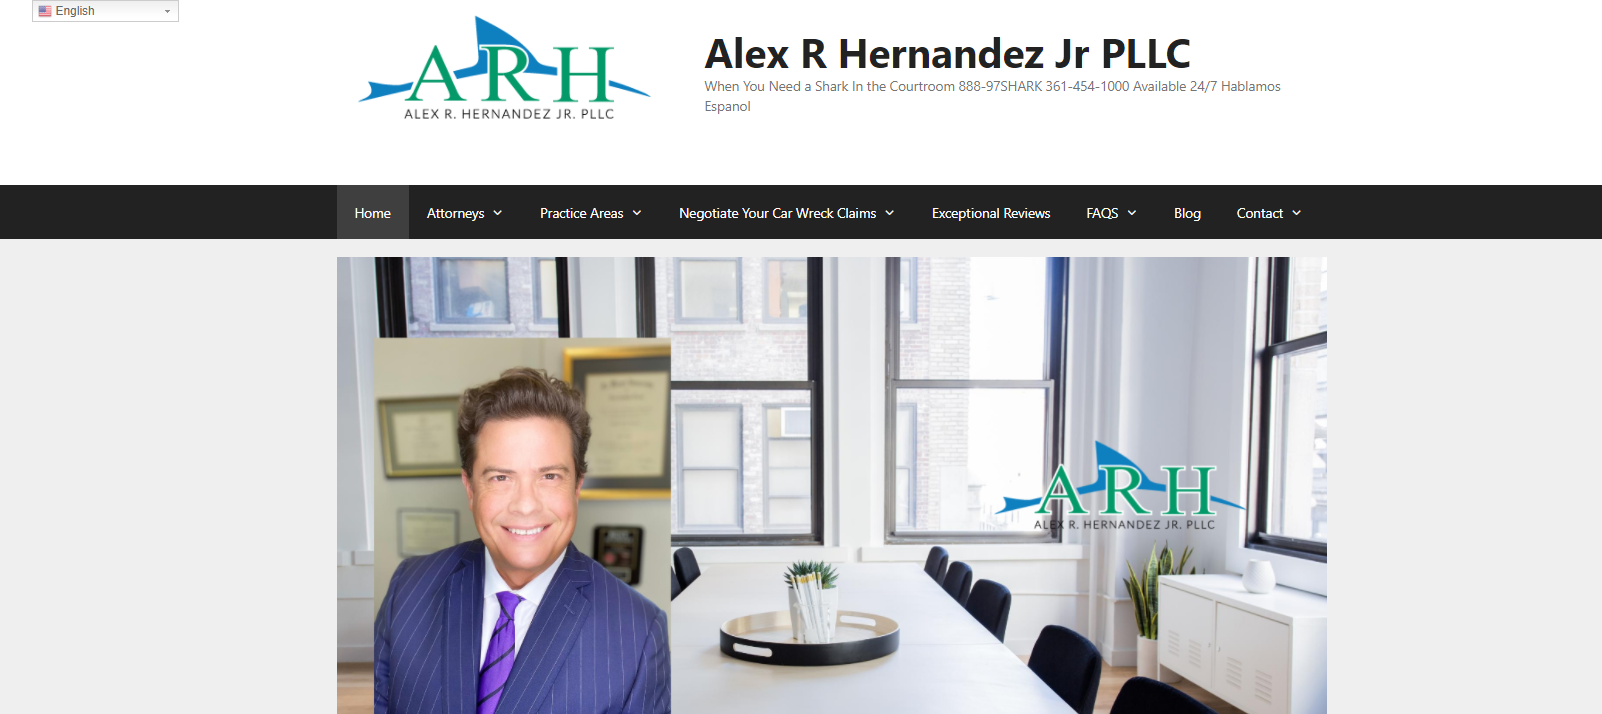 Alex R. Hernandez Jr. PLLC